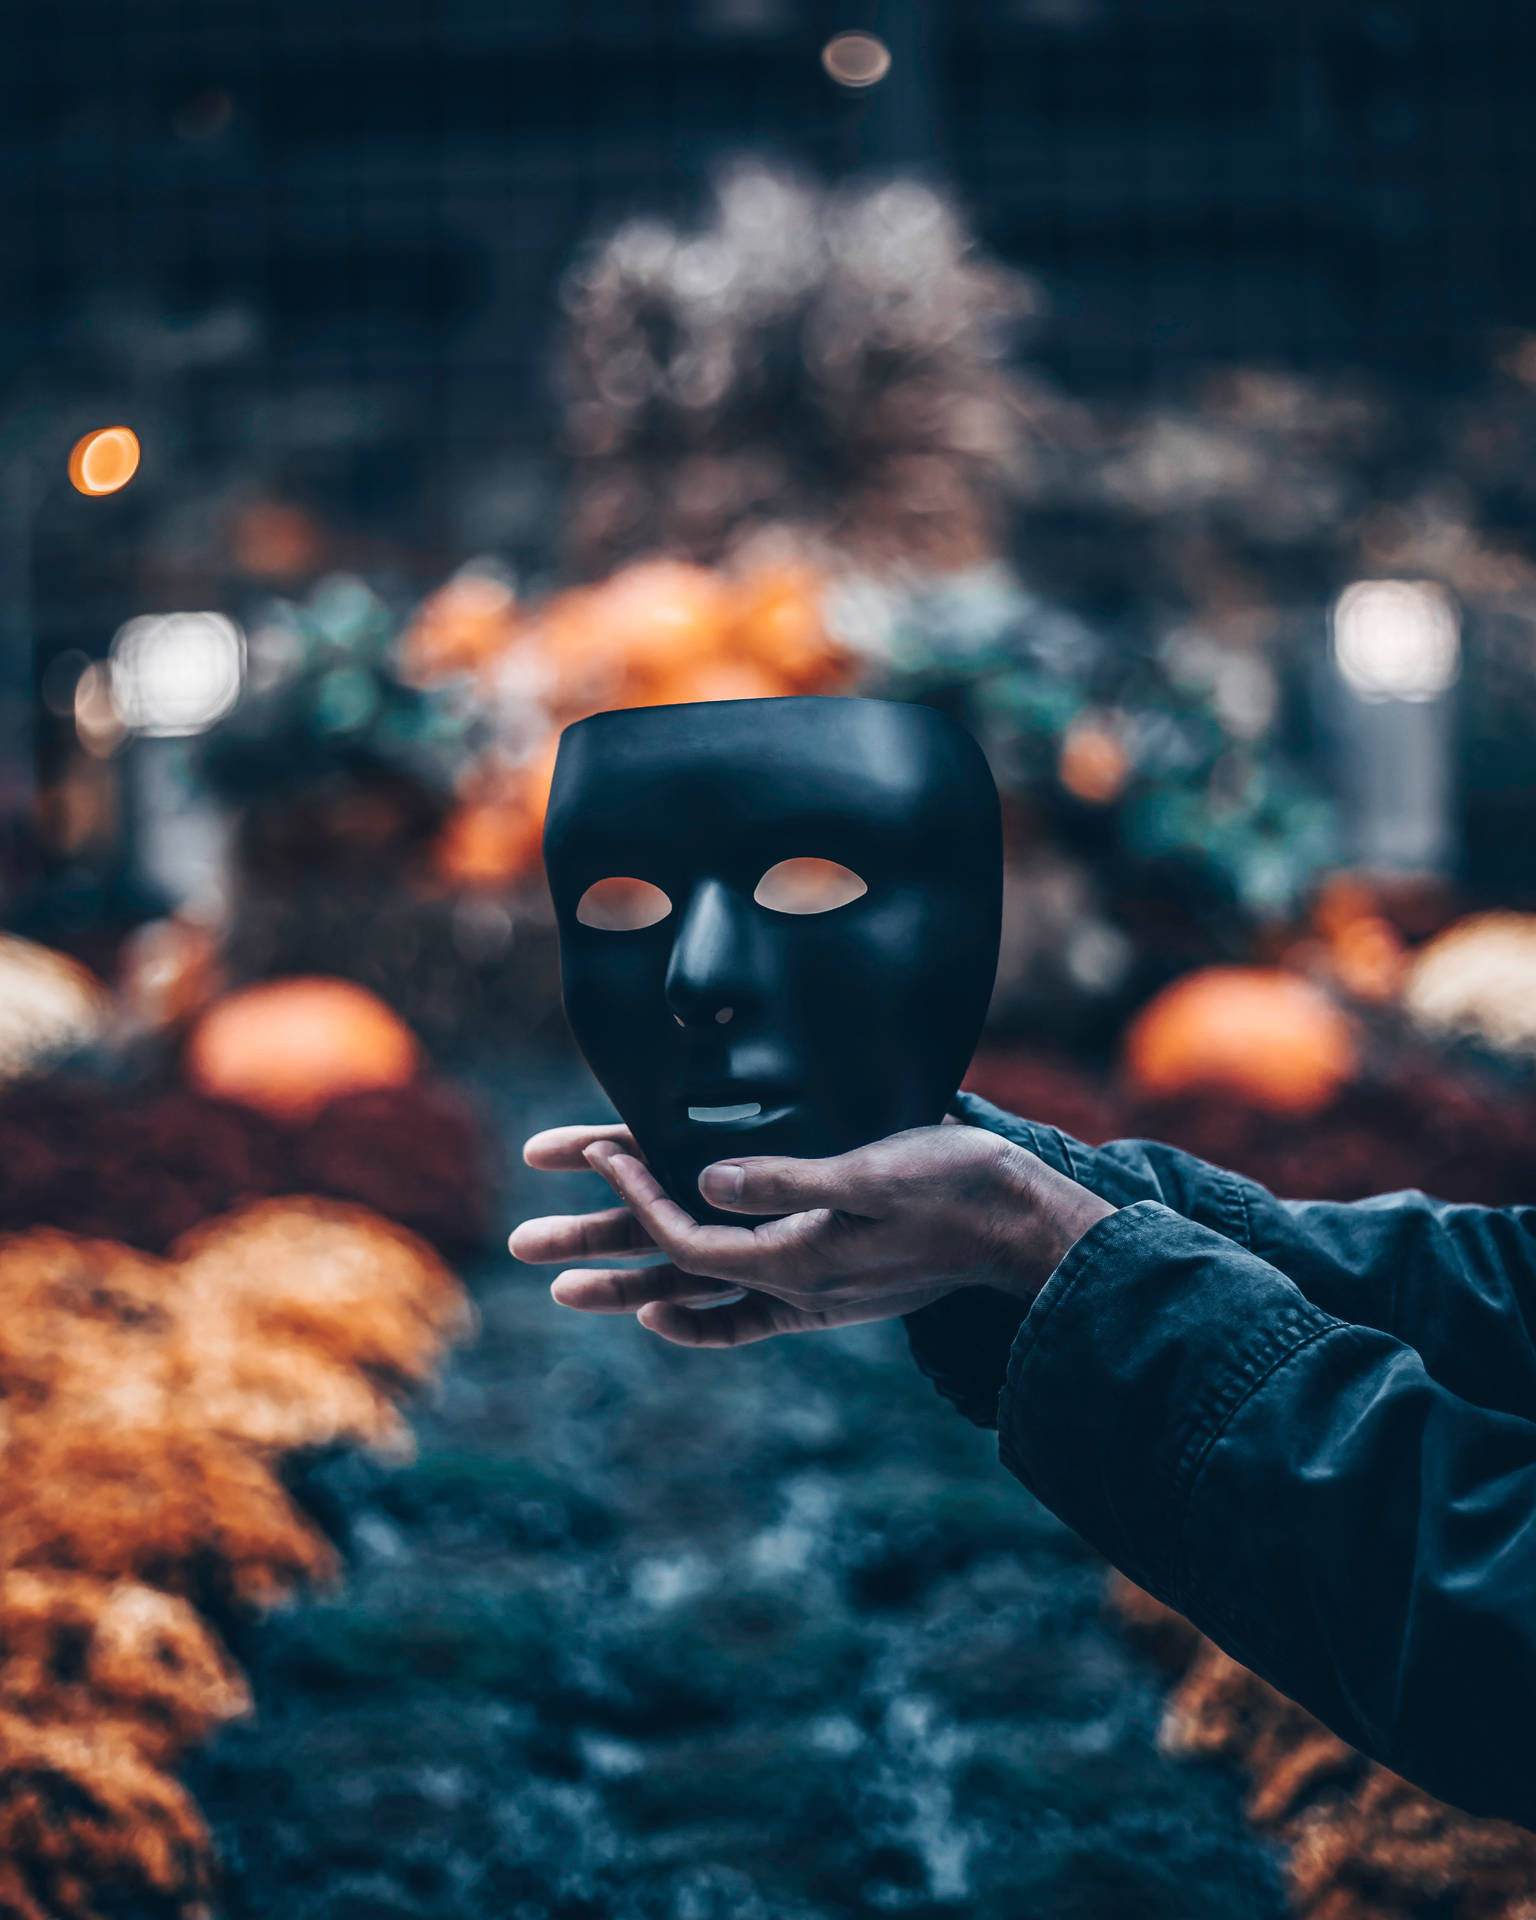 Spooky Black Mask In Hand